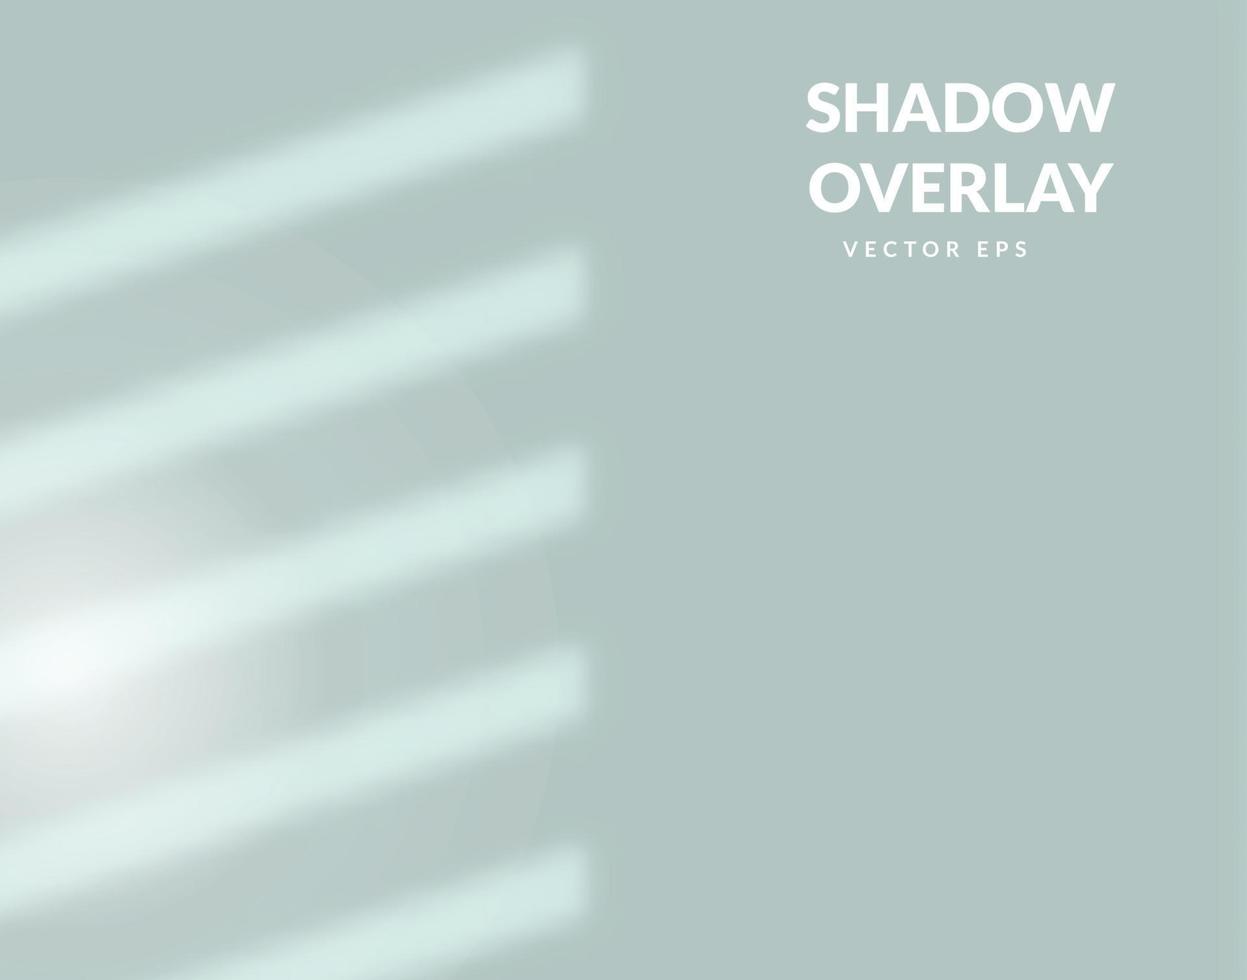 Shadow overlay effect vector